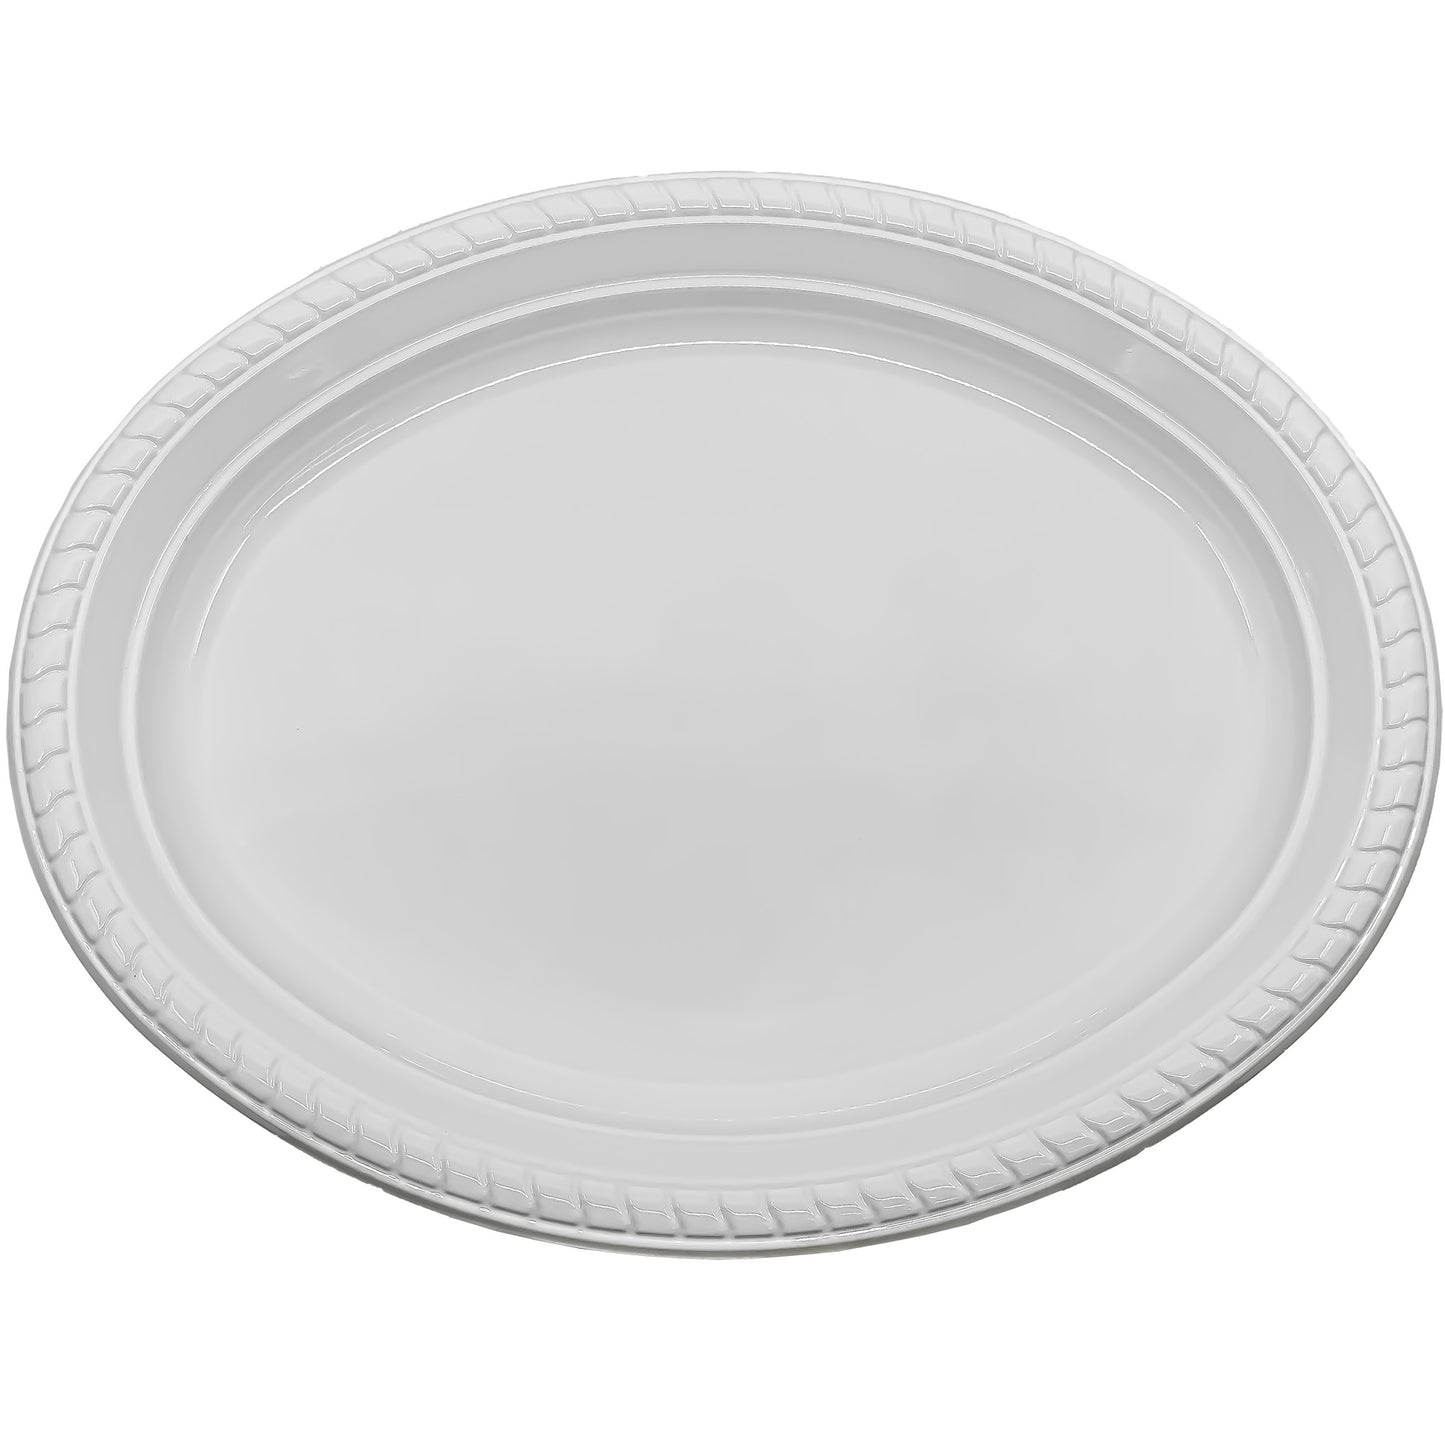 White Plastic Oval Serving Plate 12¼" x 9¾" Plastic Plates Hanna K   